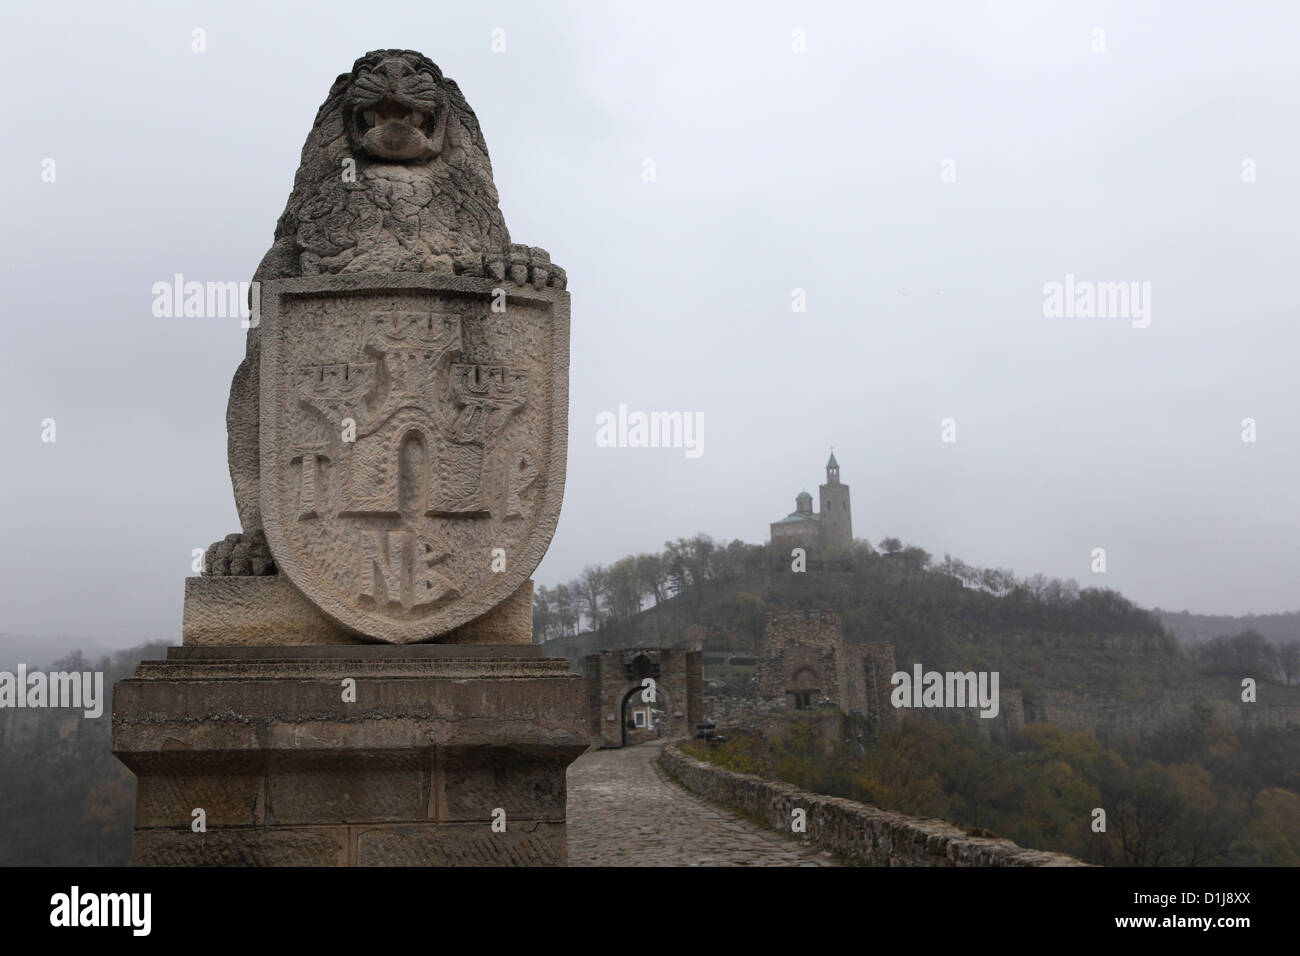 Lion sculpture at the castle of Veliko Tarnovo, Bulgaria. Stock Photo